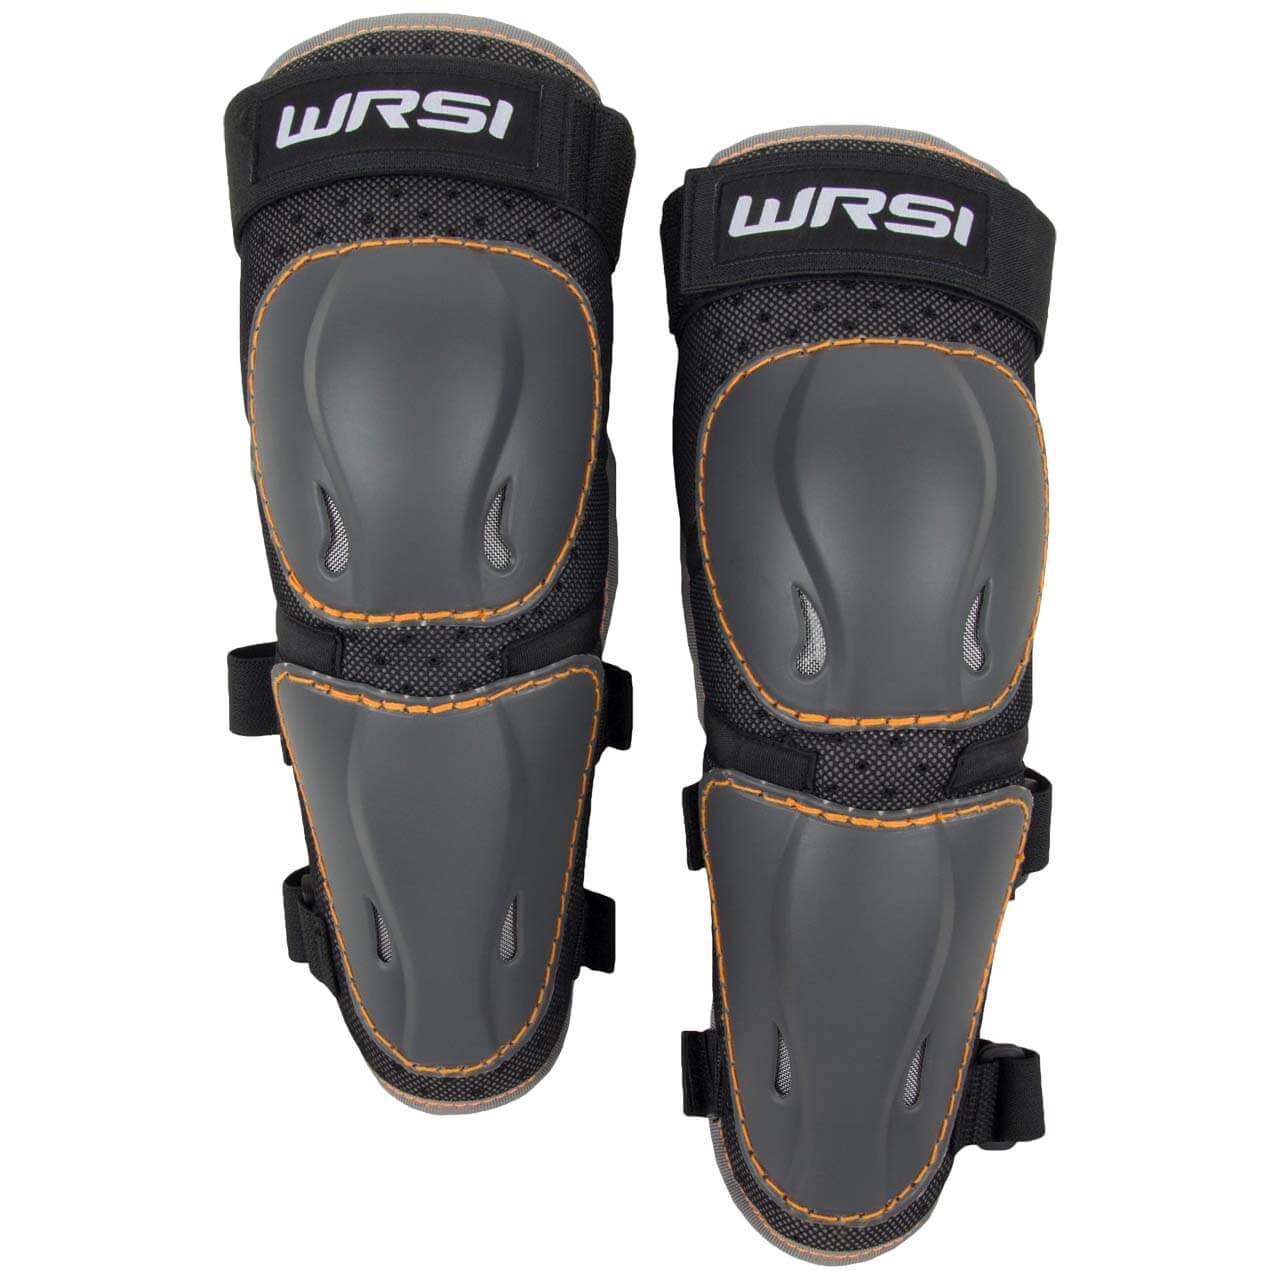 WRSI S-Turn Elbow Pads - S/M